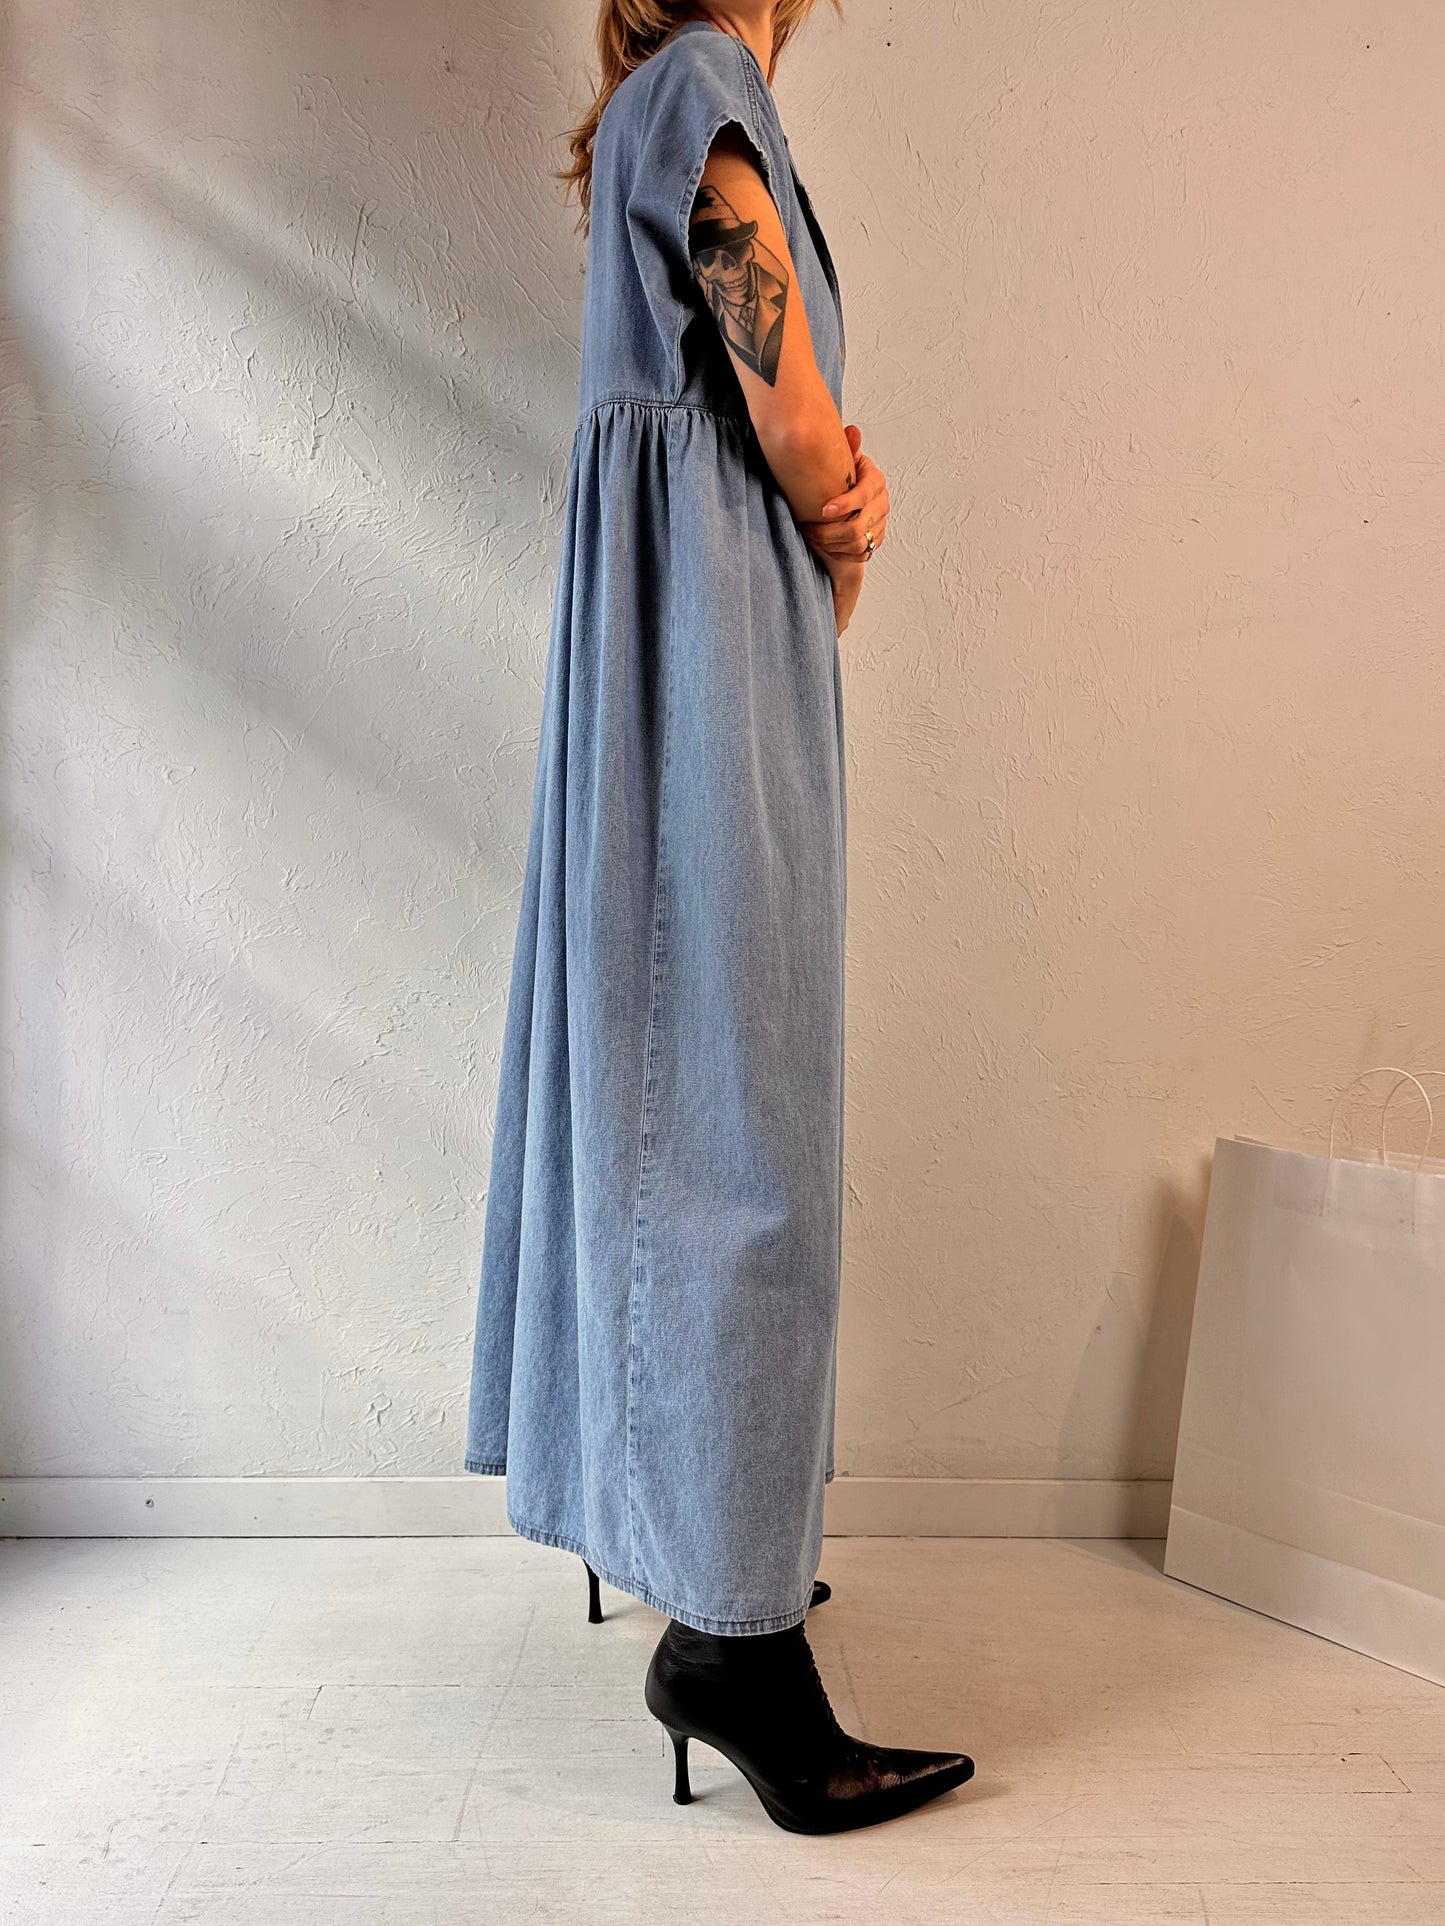 90s 'Cotton Ginny' Button Up Dress / Medium